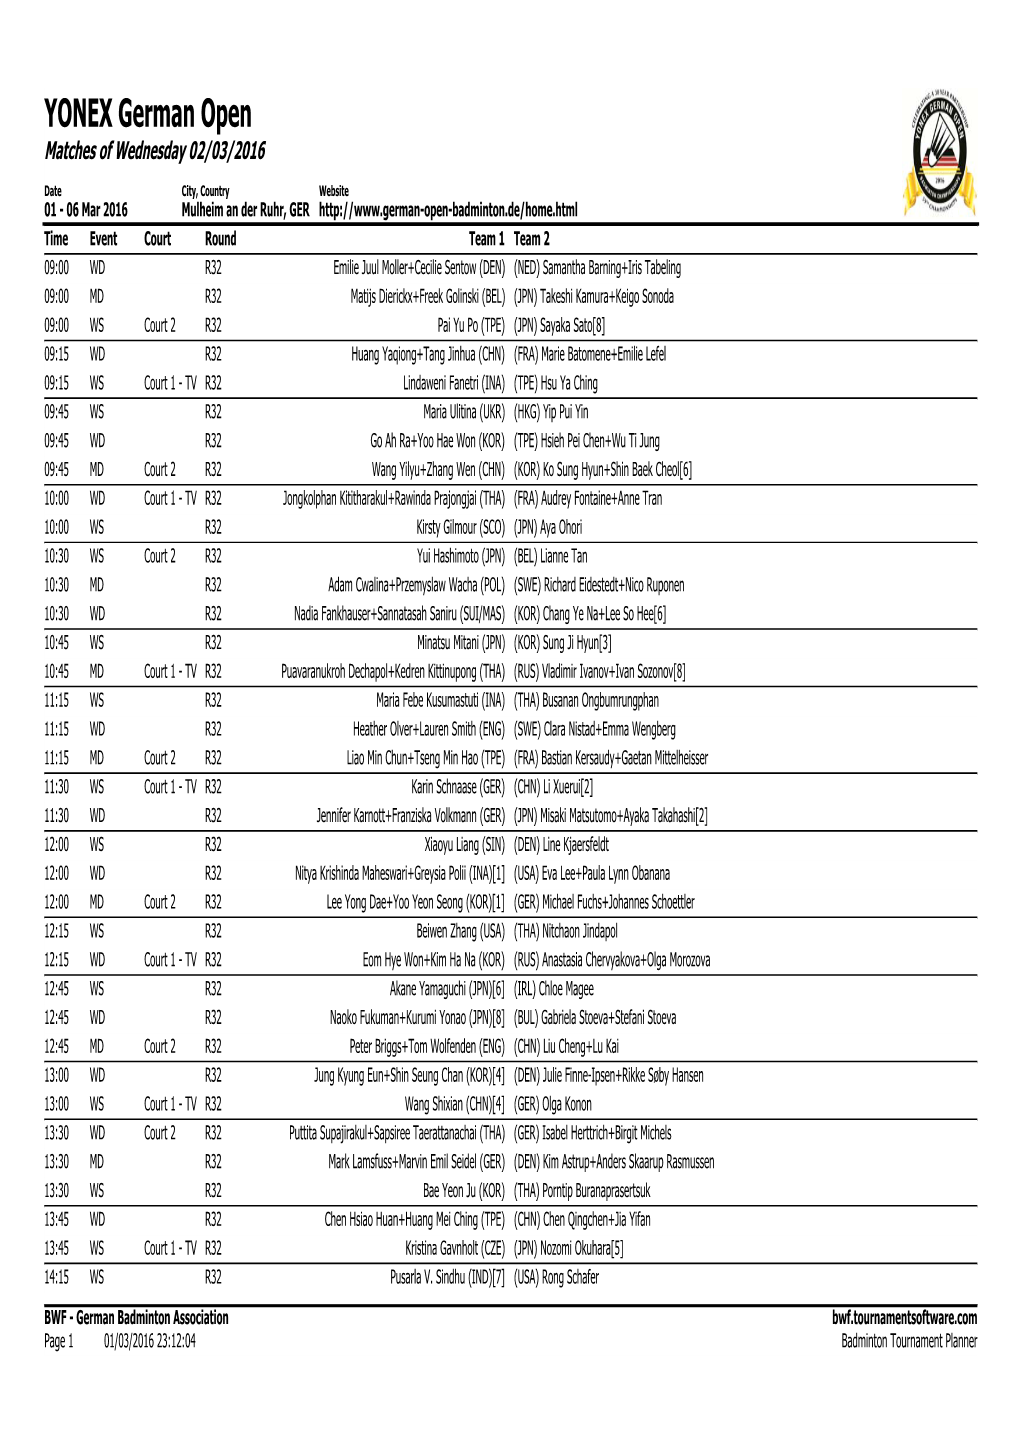 Badminton Tournament Planner YONEX German Open Matches of Wednesday 02/03/2016